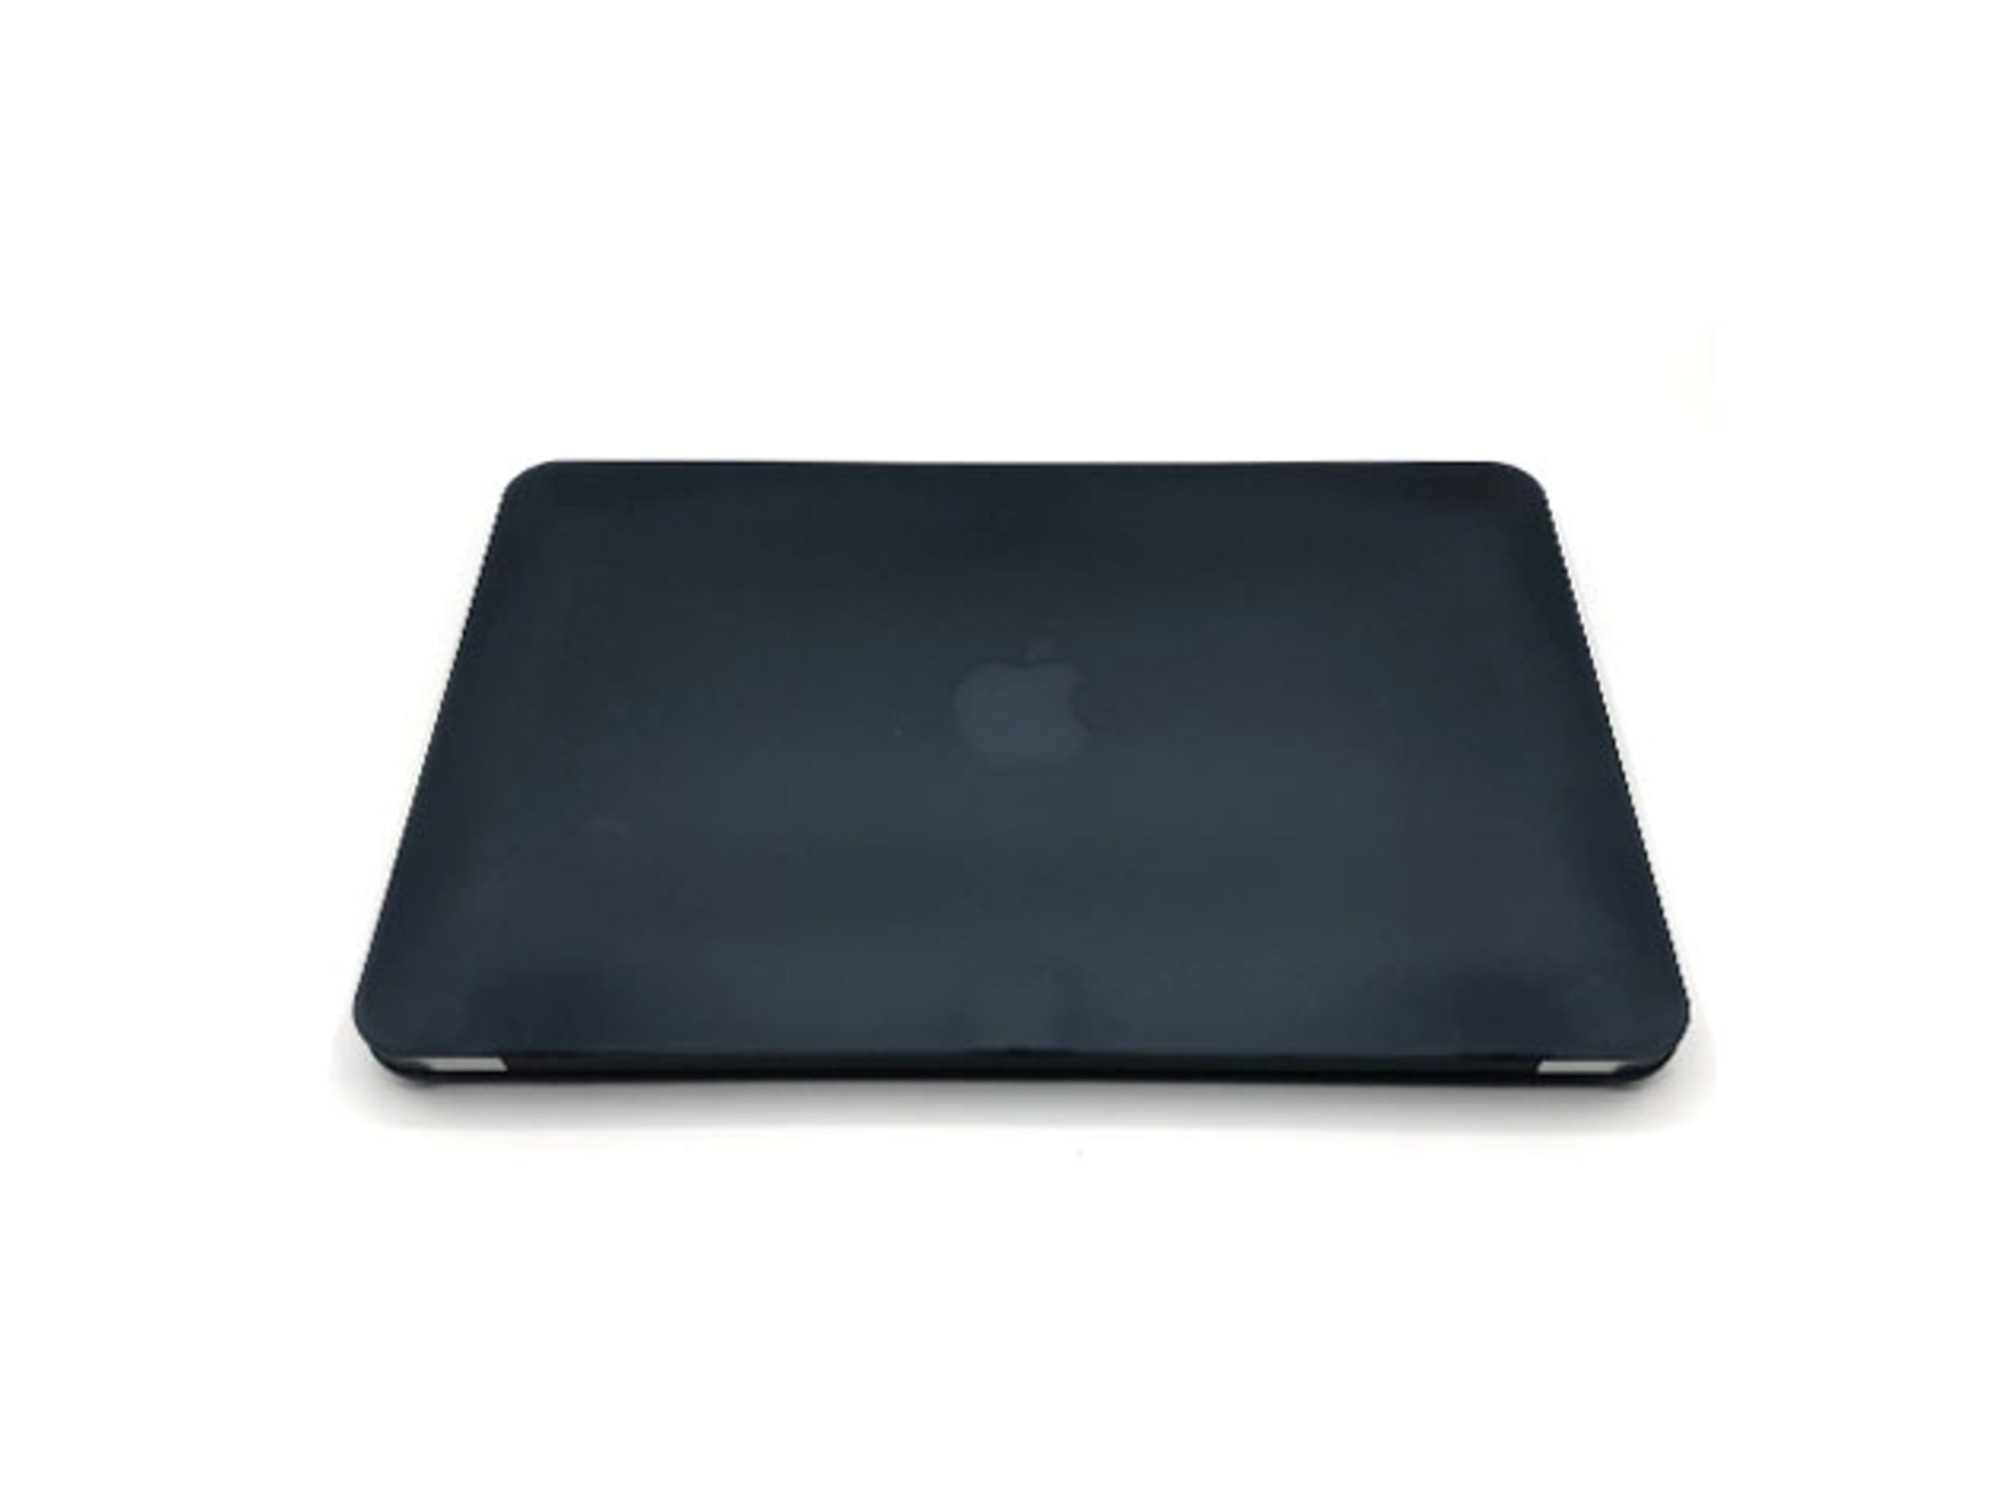 A Macbook Air in a black case on a white background